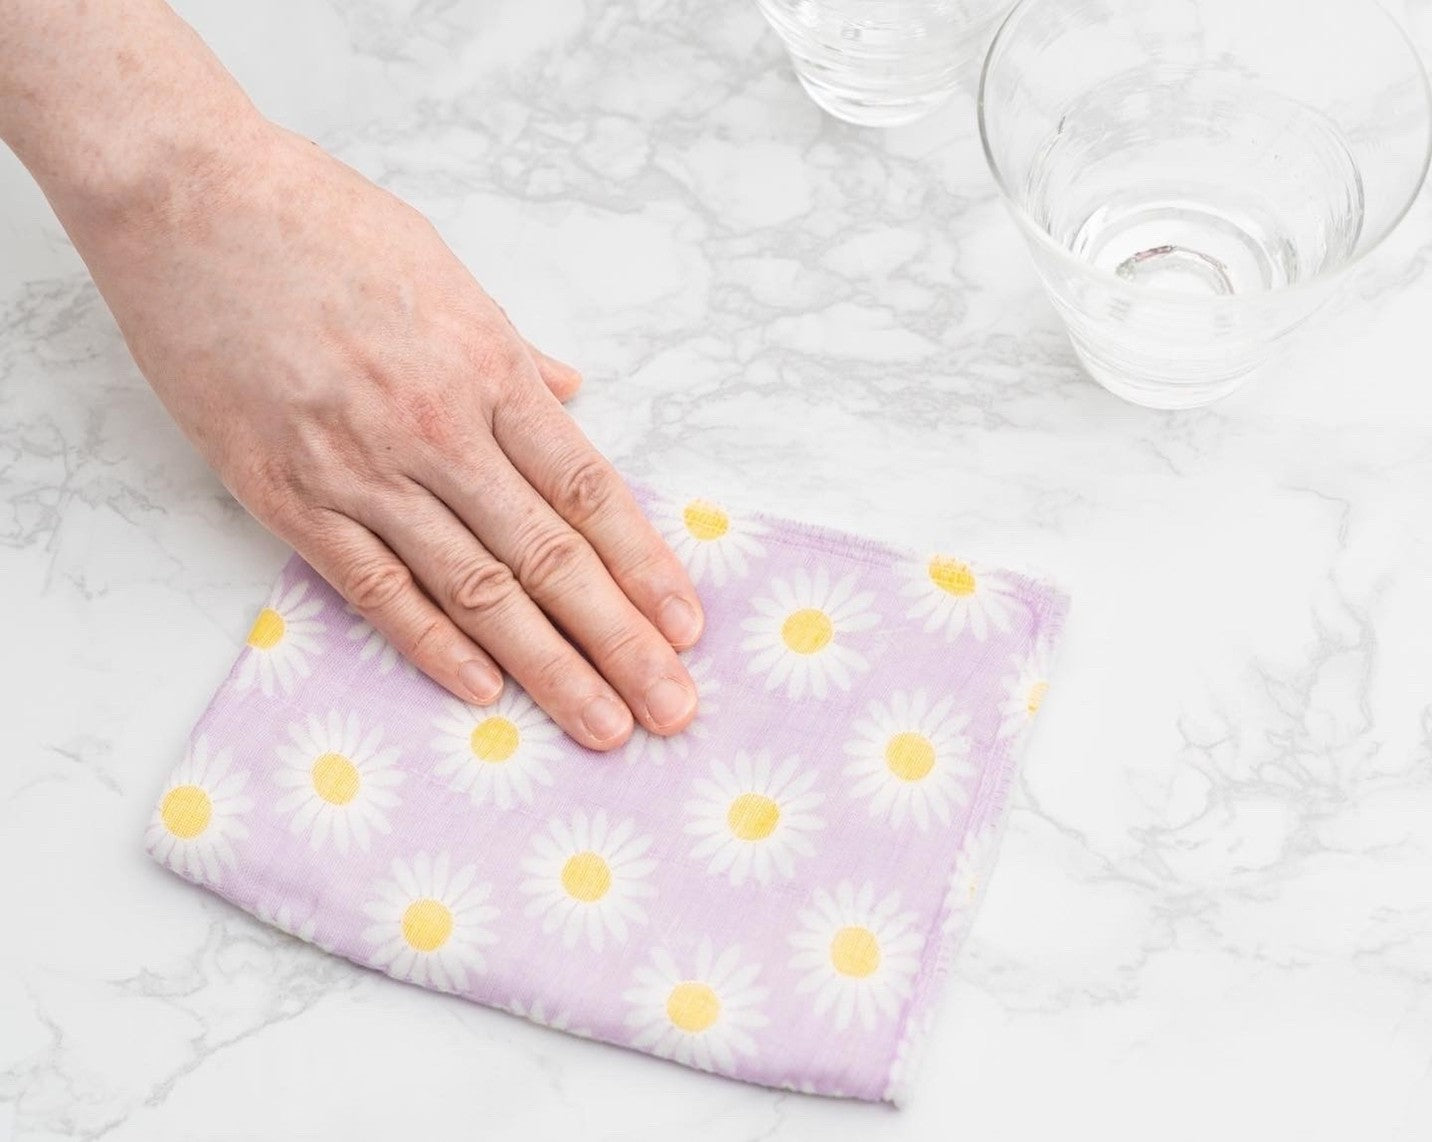 The Flower Kitchen Cloth Bundle (Online Store Exclusive)